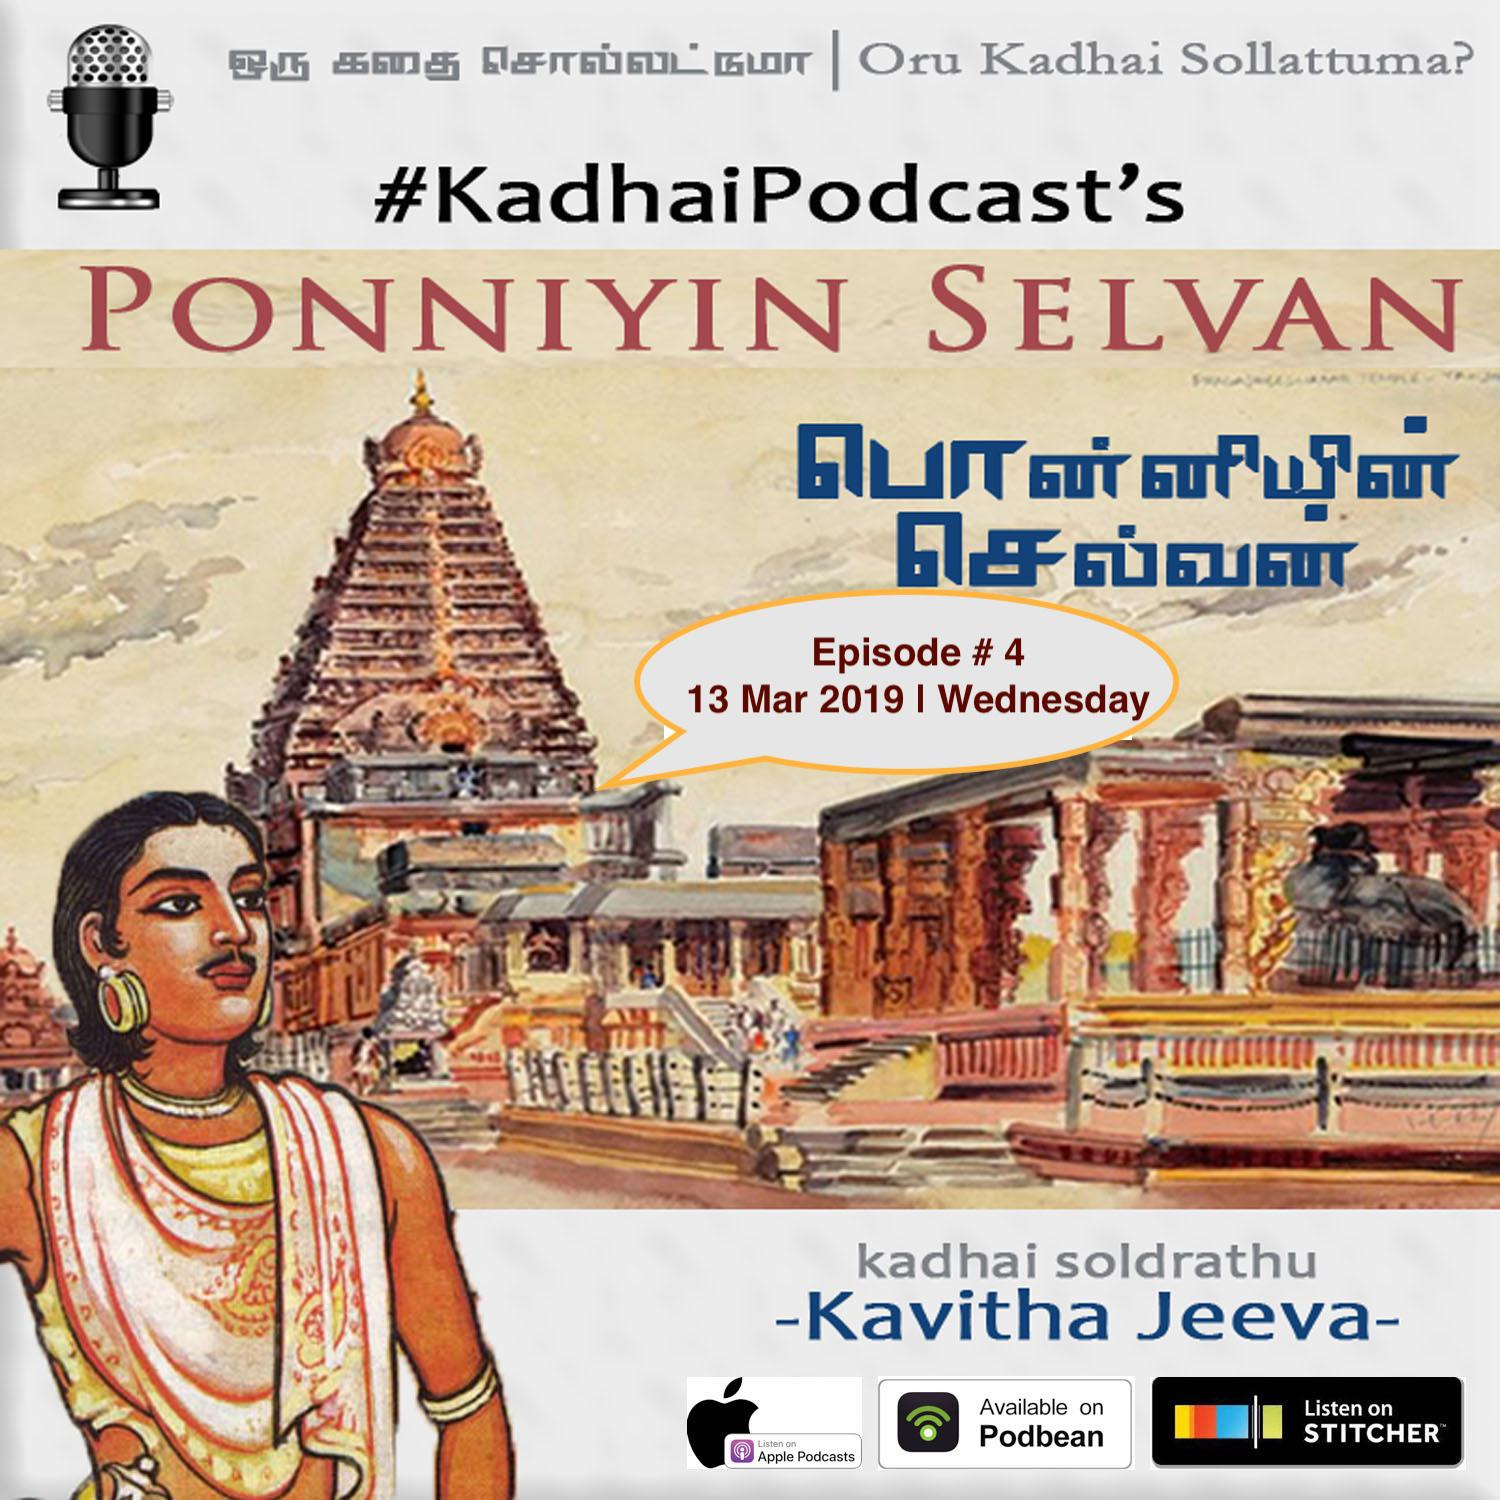 KadhaiPodcast's Ponniyin Selvan - Episode # 4